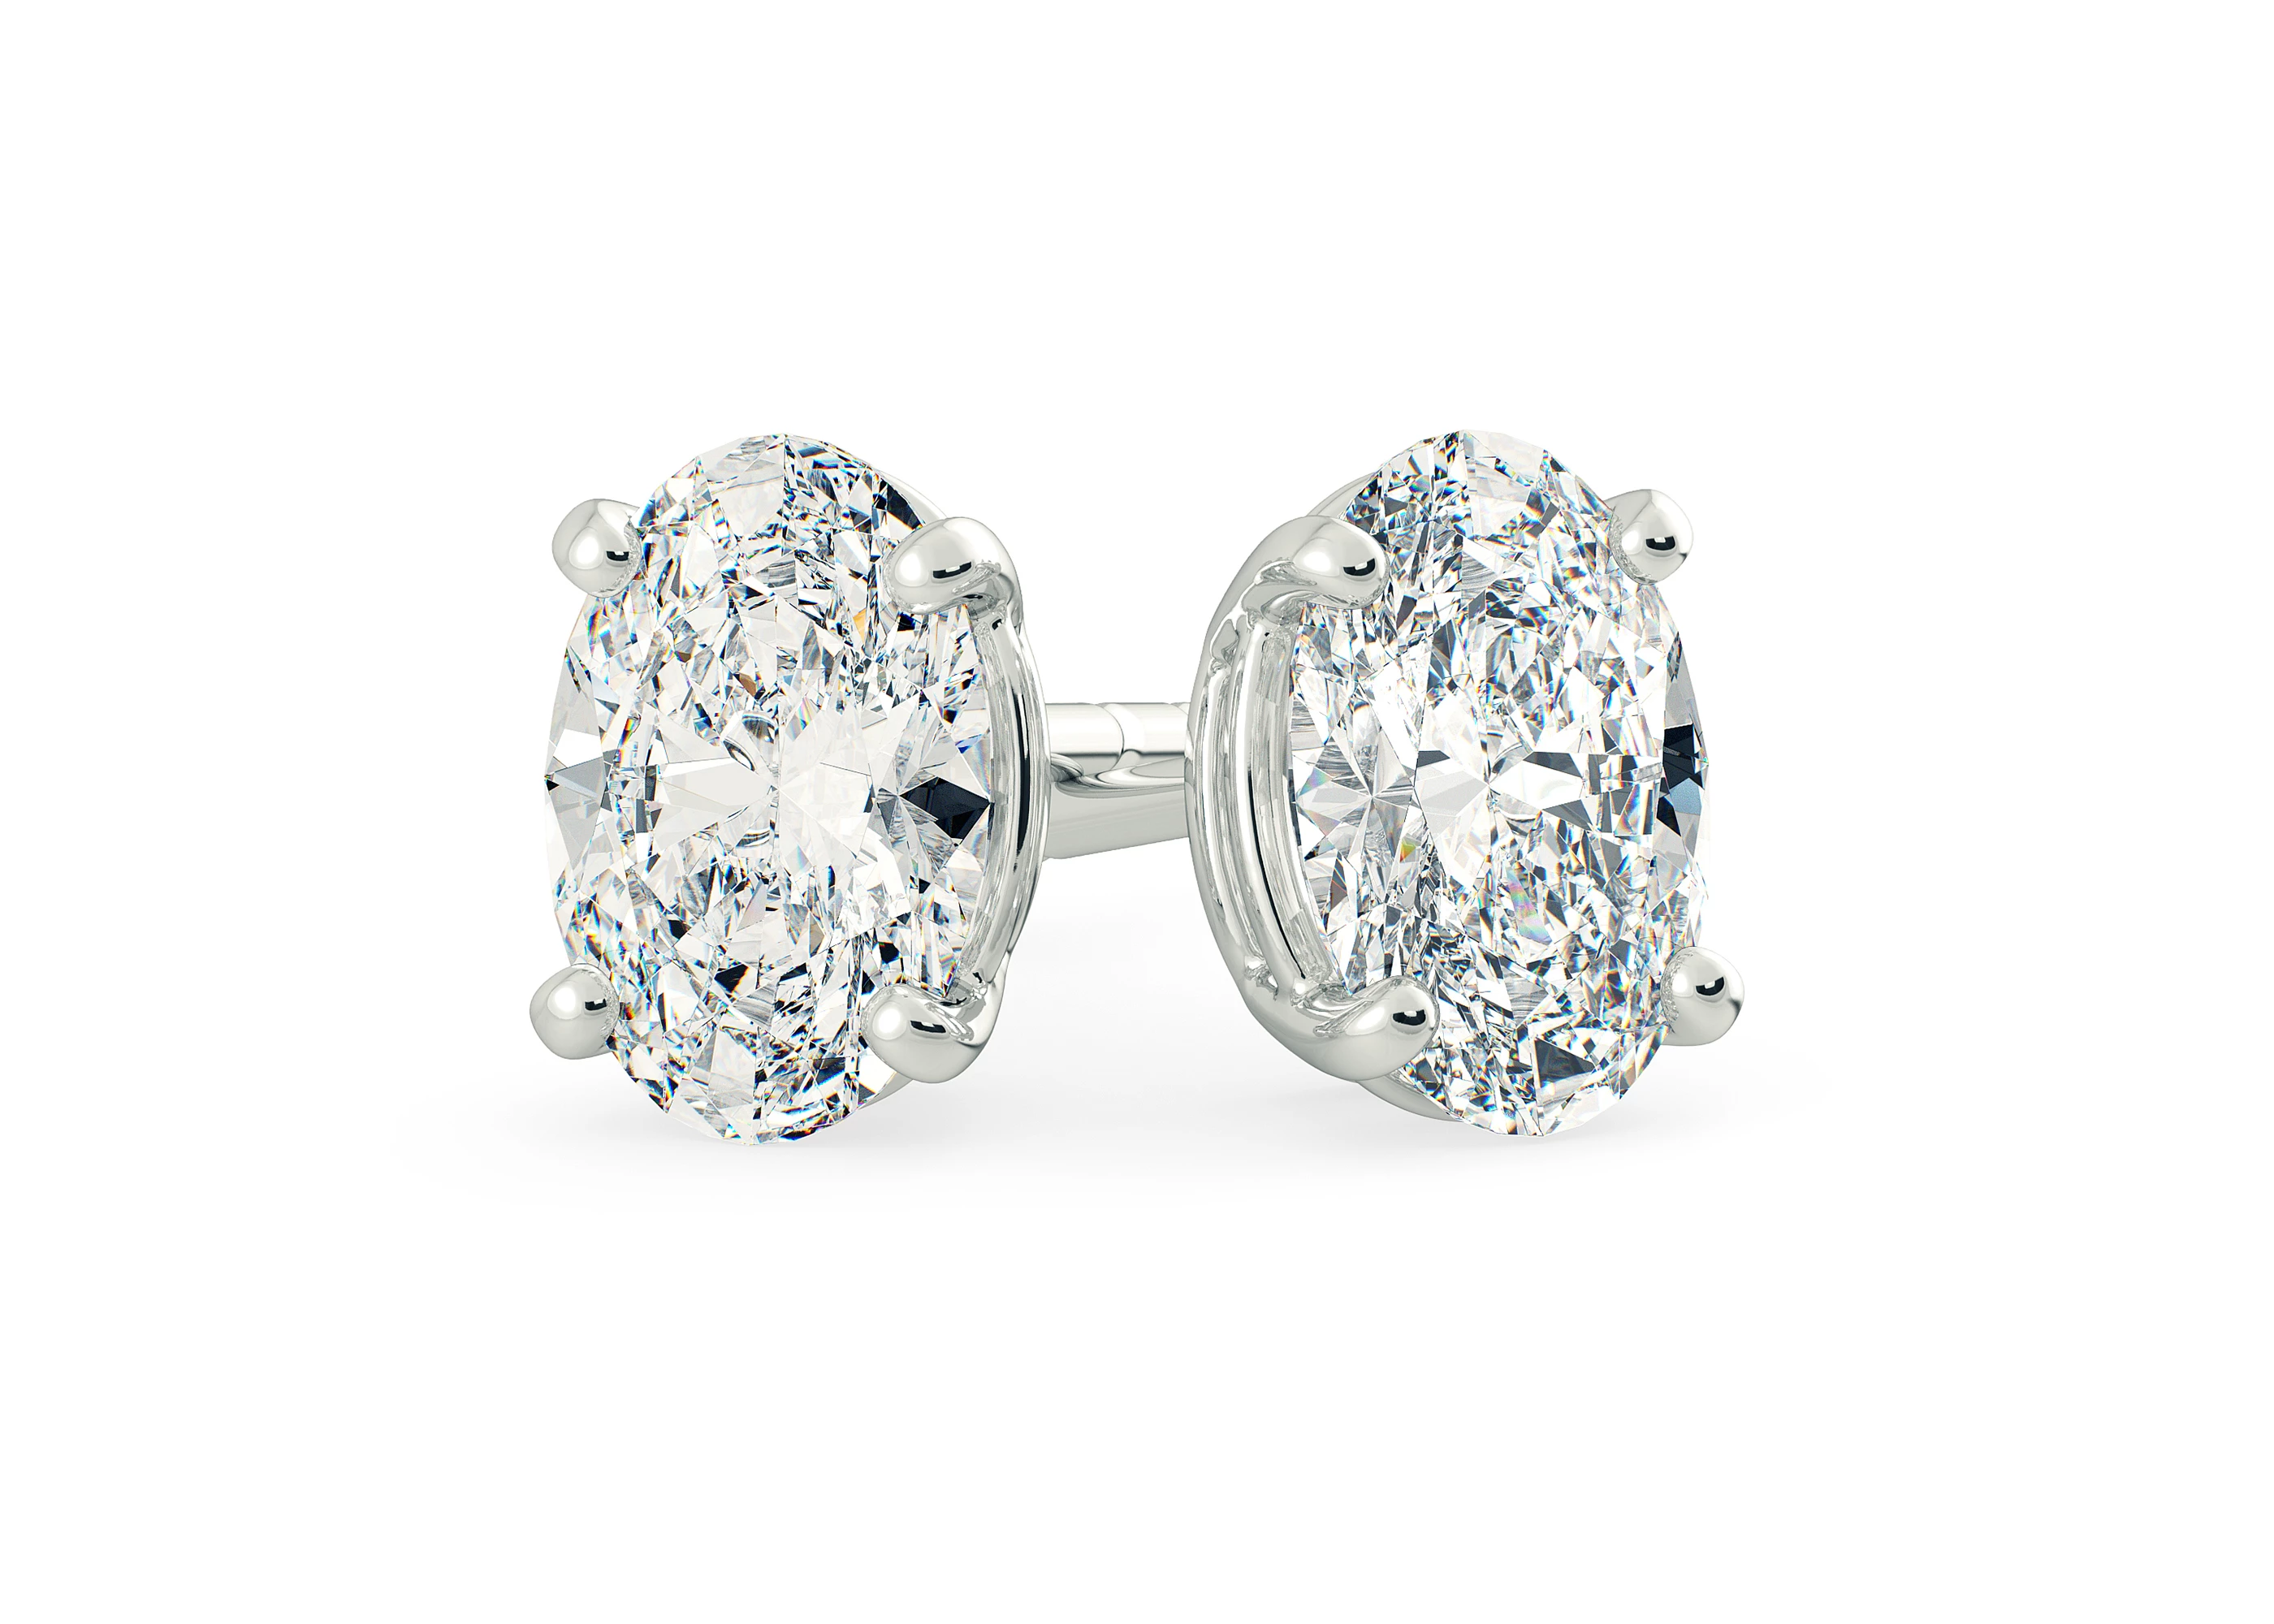 Ettore Oval Diamond Stud Earrings in 18K White Gold with Alpha Backs